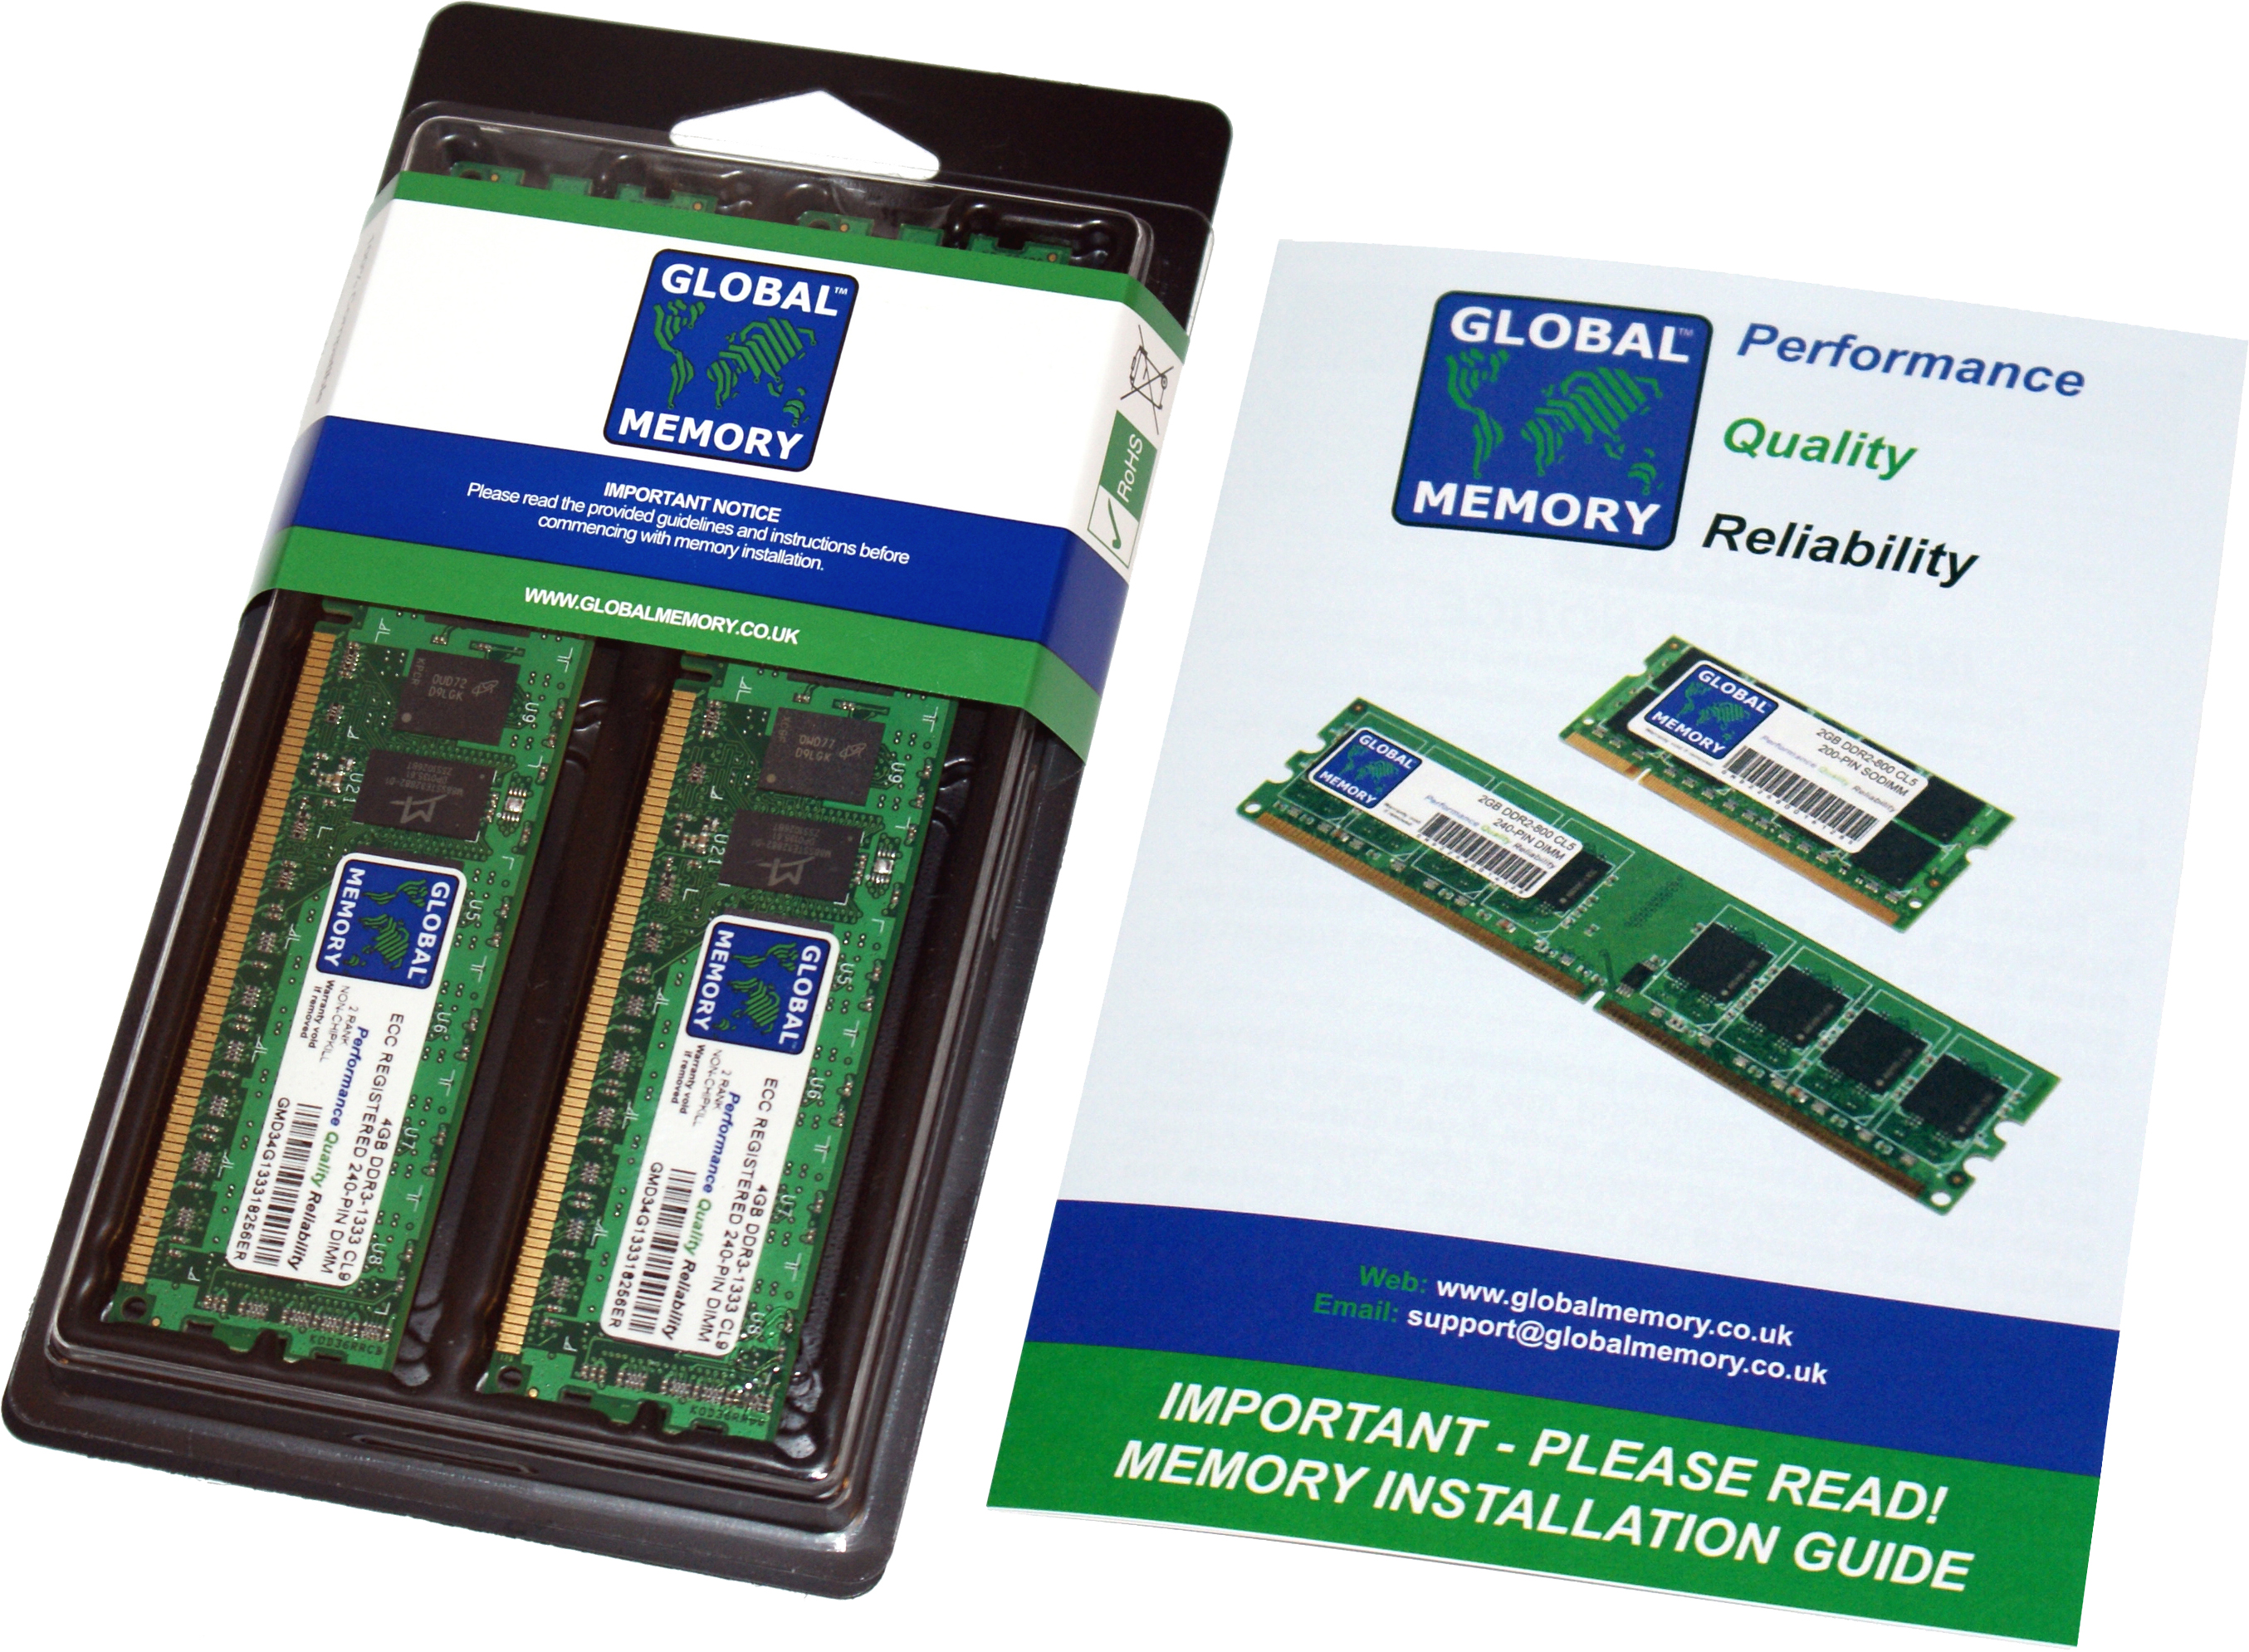 32GB (2 x 16GB) DDR4 2666MHz PC4-21300 288-PIN ECC REGISTERED DIMM (RDIMM) MEMORY RAM KIT FOR SUN SERVERS/WORKSTATIONS (4 RANK KIT CHIPKILL)